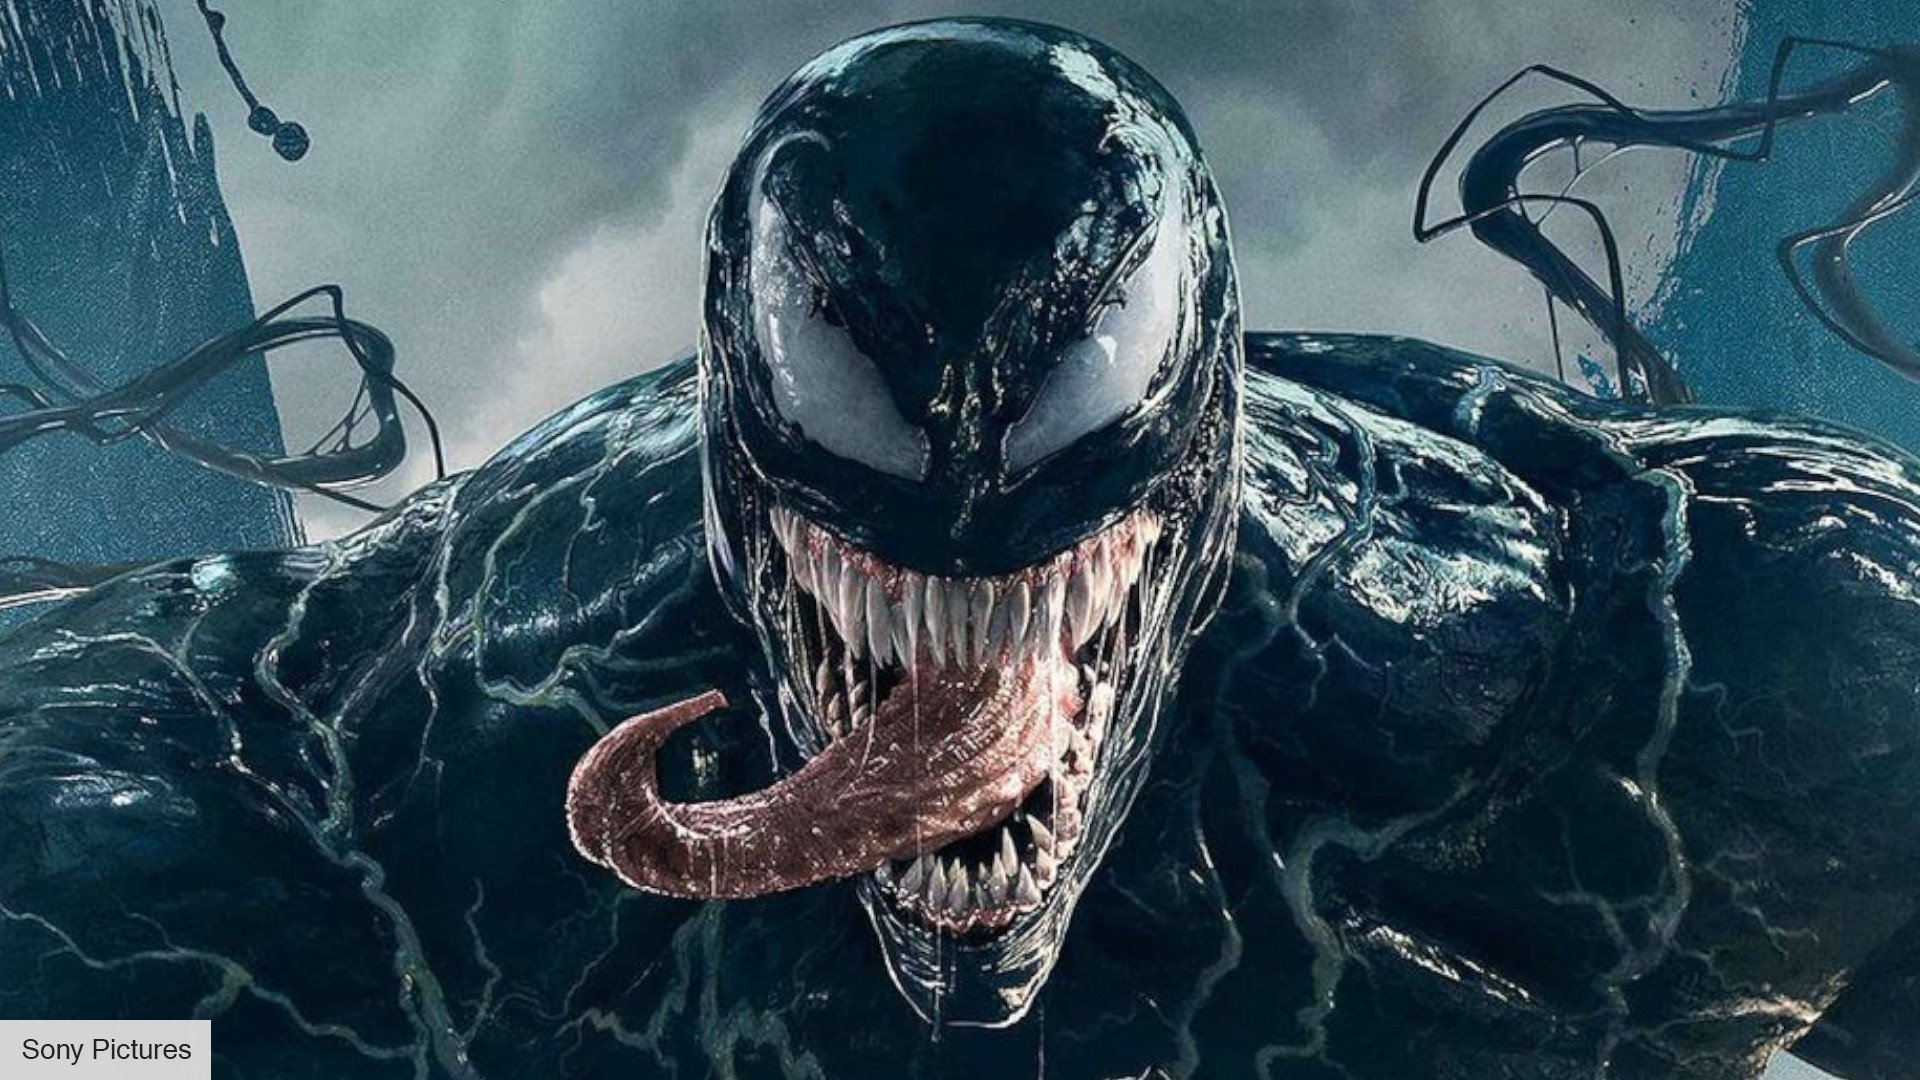 Venom 3 release date speculation, trailer, cast, and more | The Digital Fix